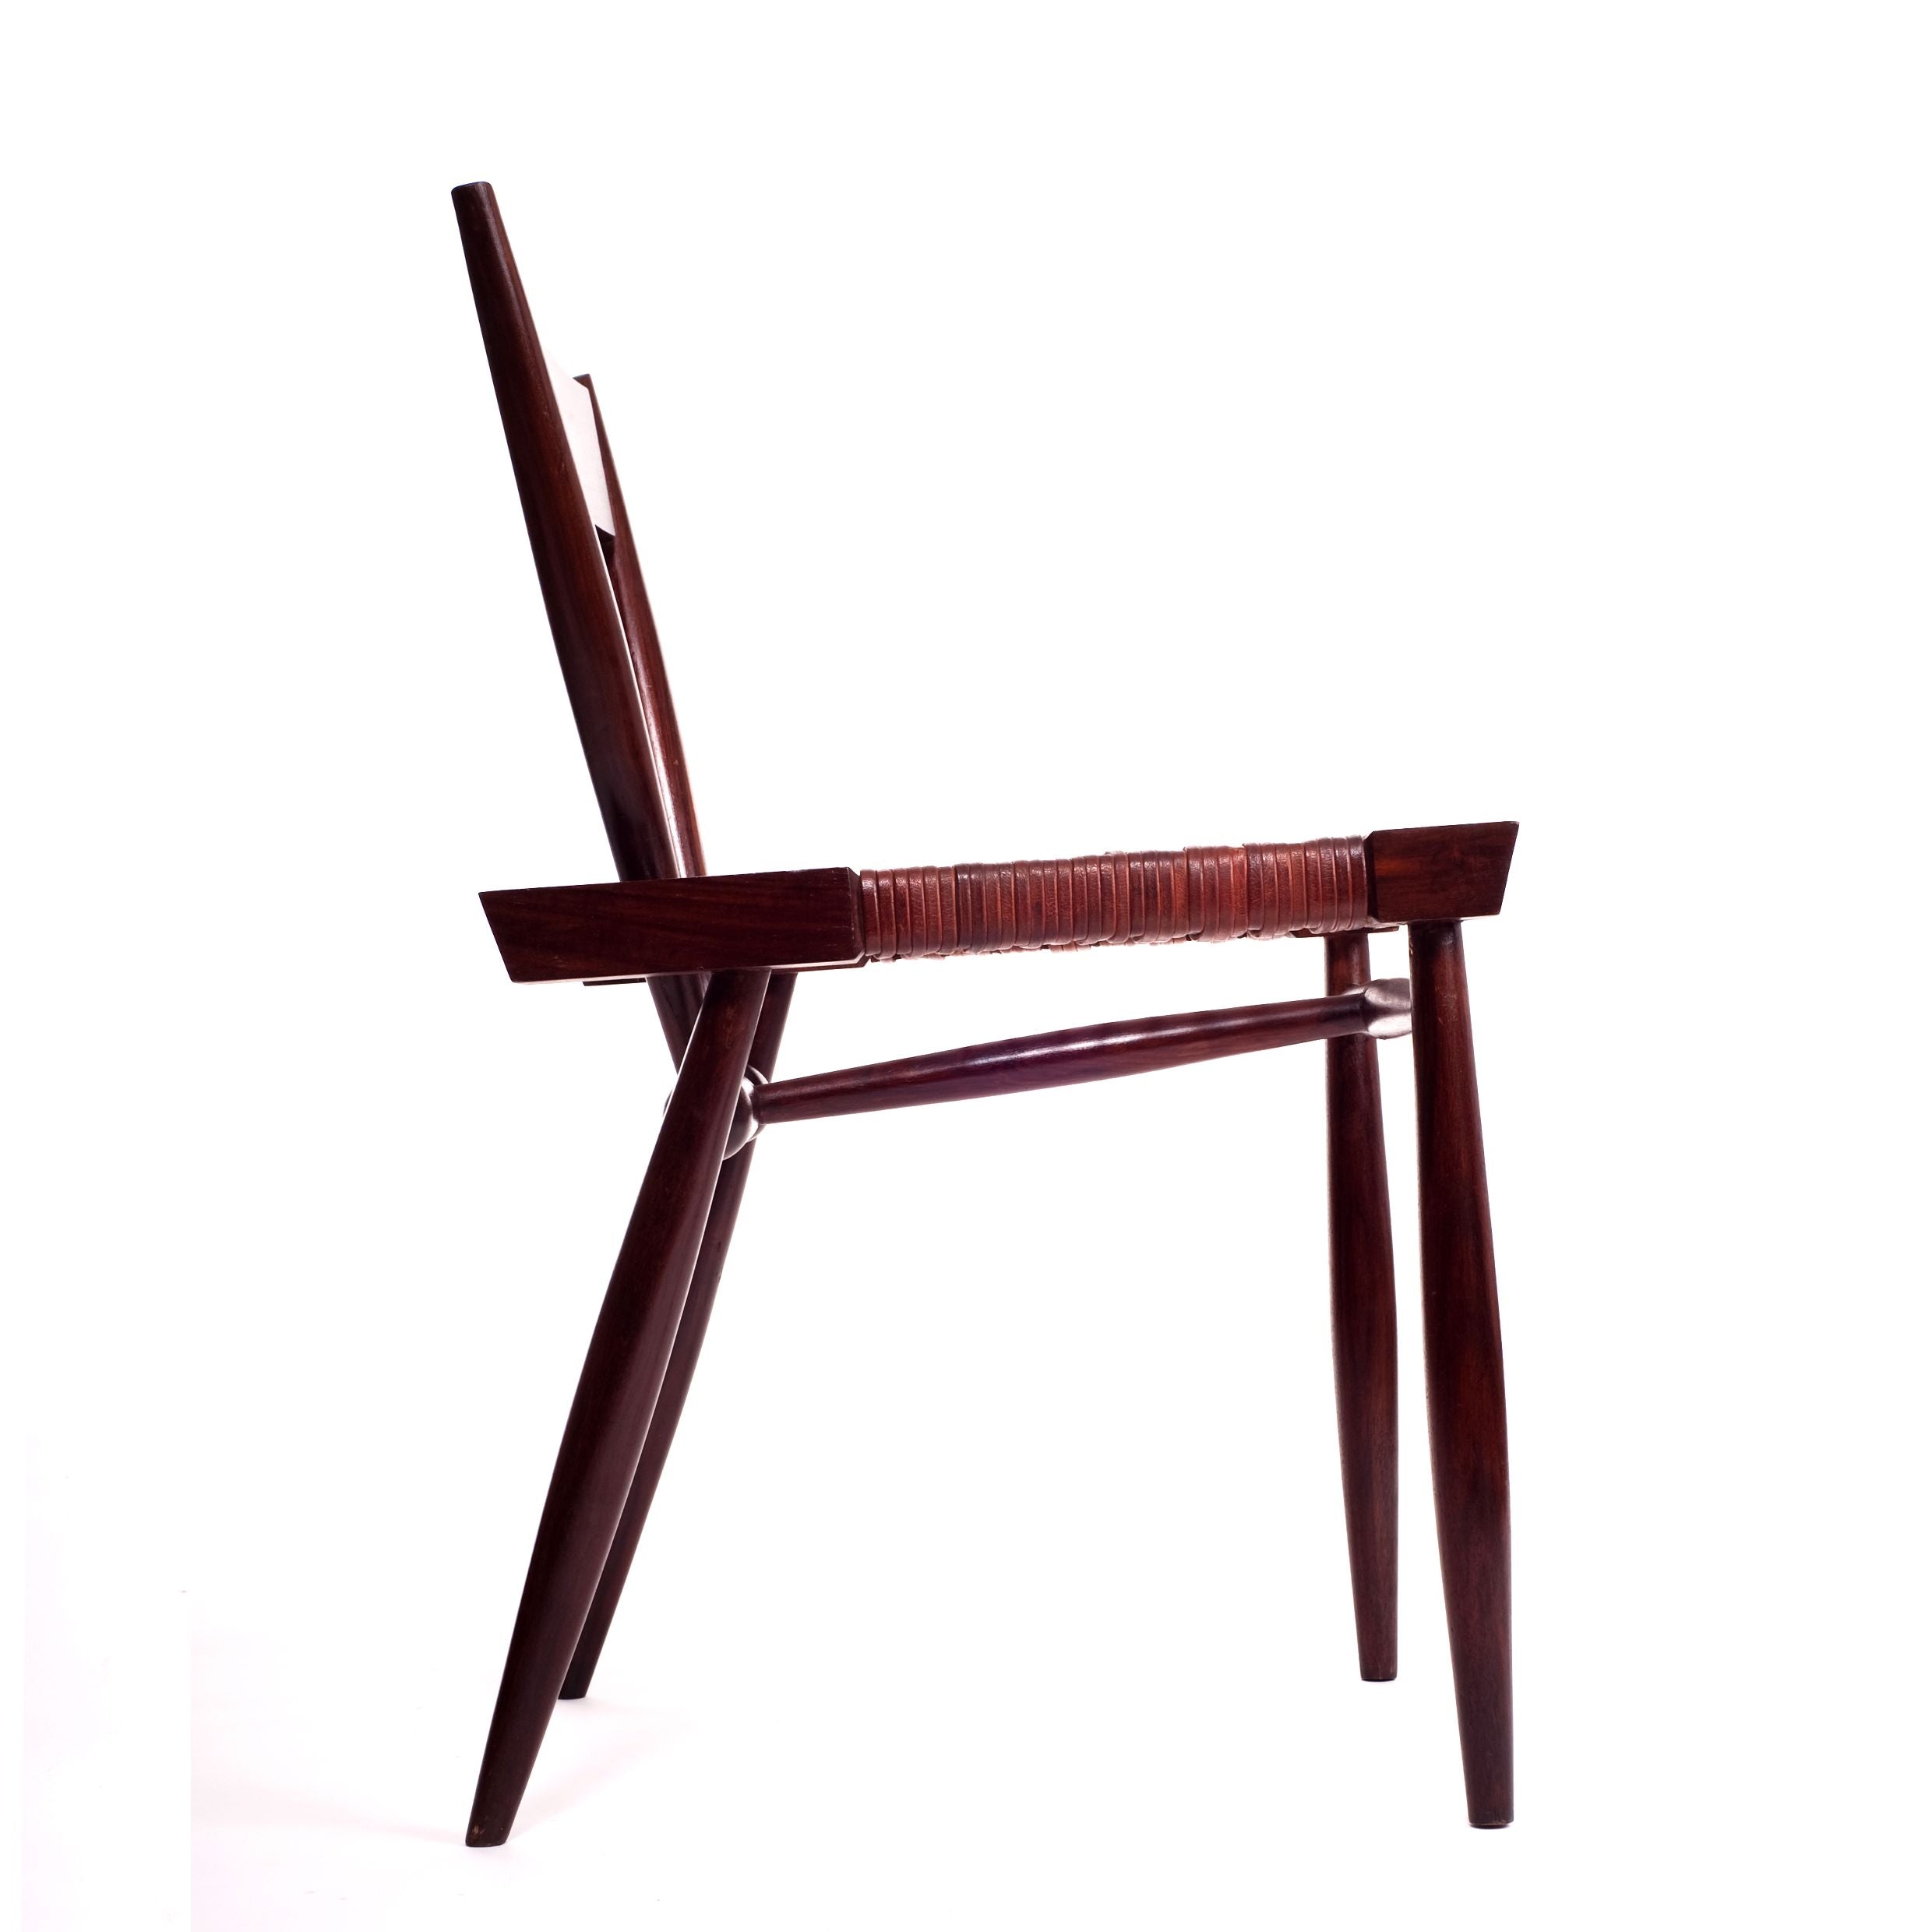 Leather Strap chair sheesham wood outdoor furniture classic design elegant comfortable Minimal wooden